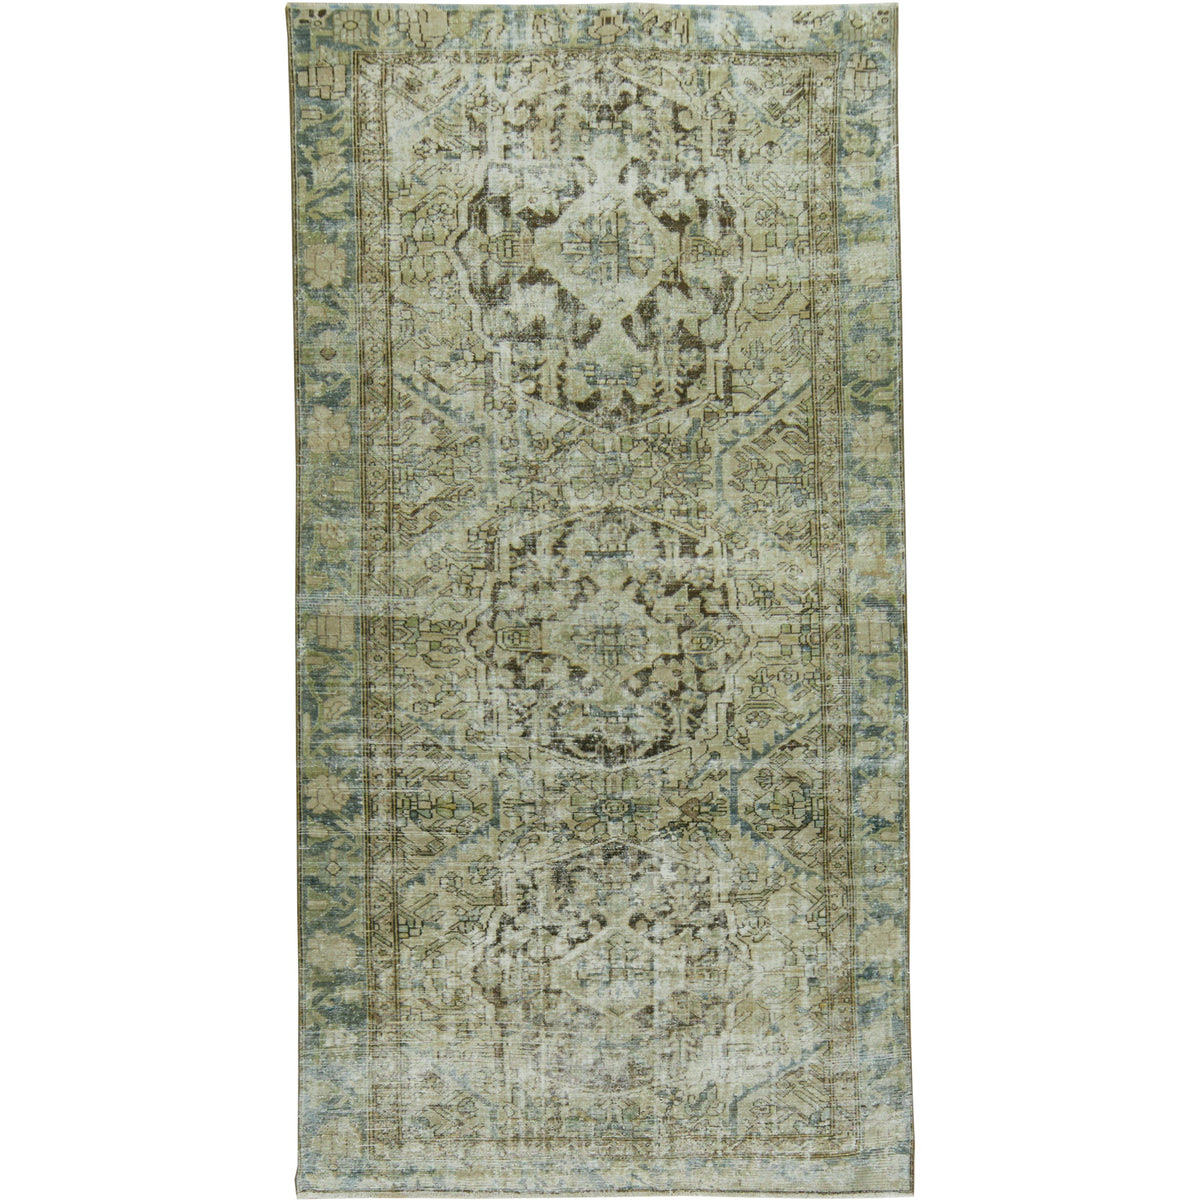 Garlanah - The Cream of Persian Carpets | Kuden Rugs